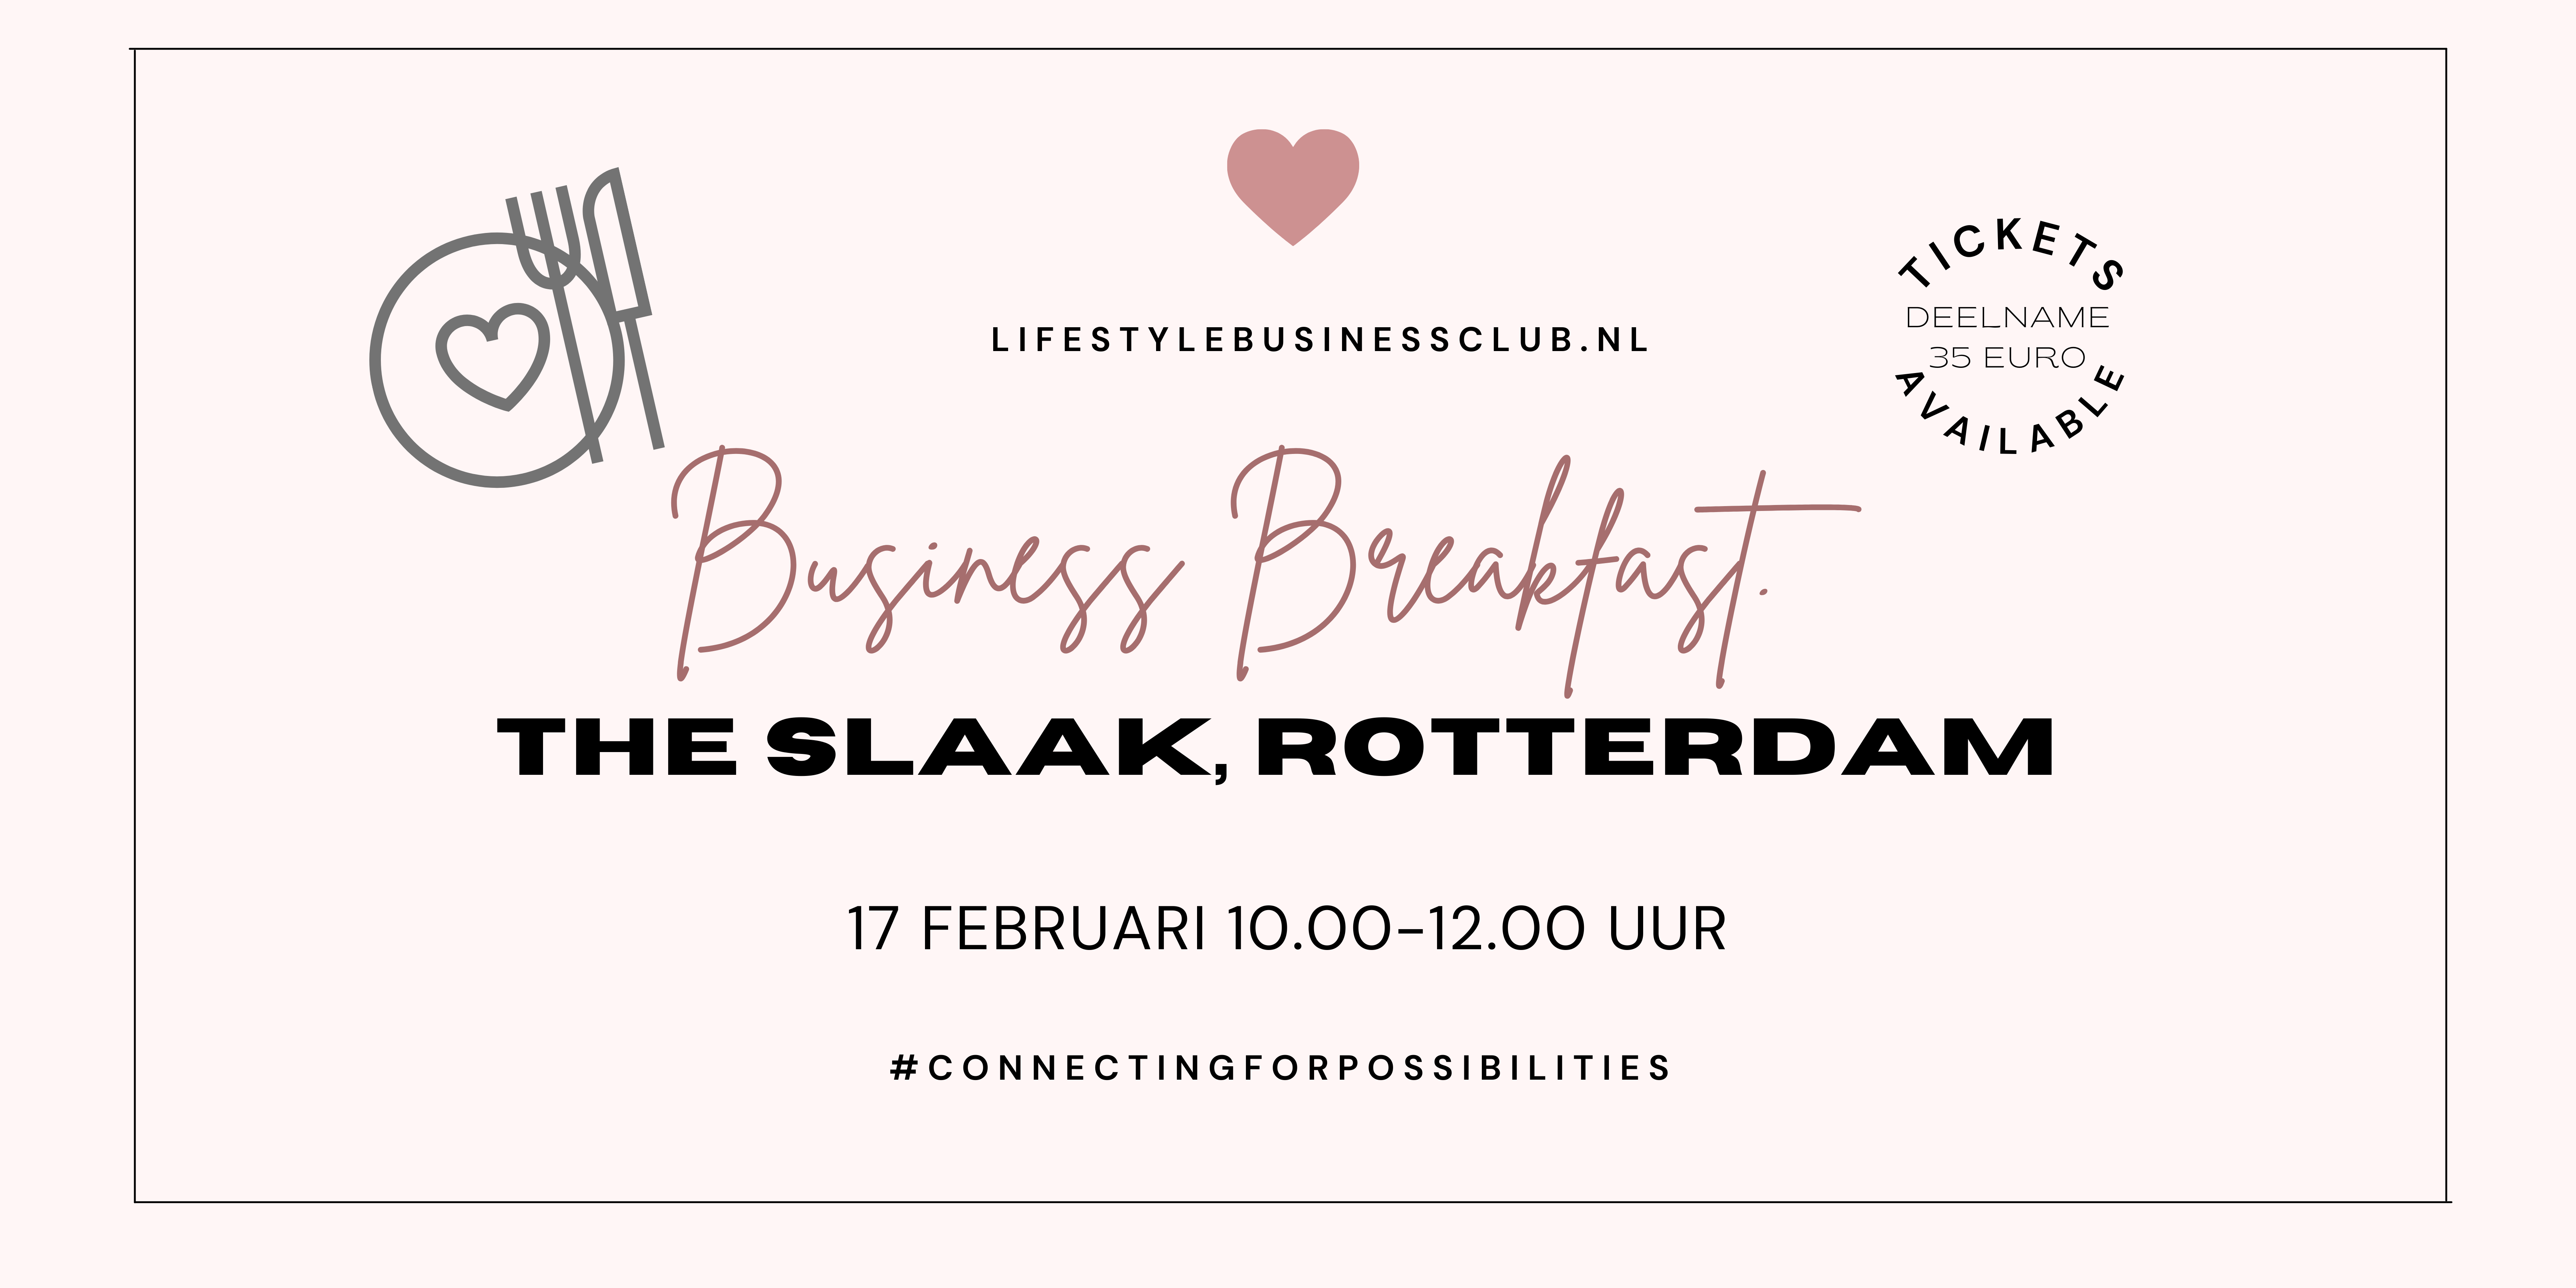 Lifestyle Business Breakfast Rotterdam